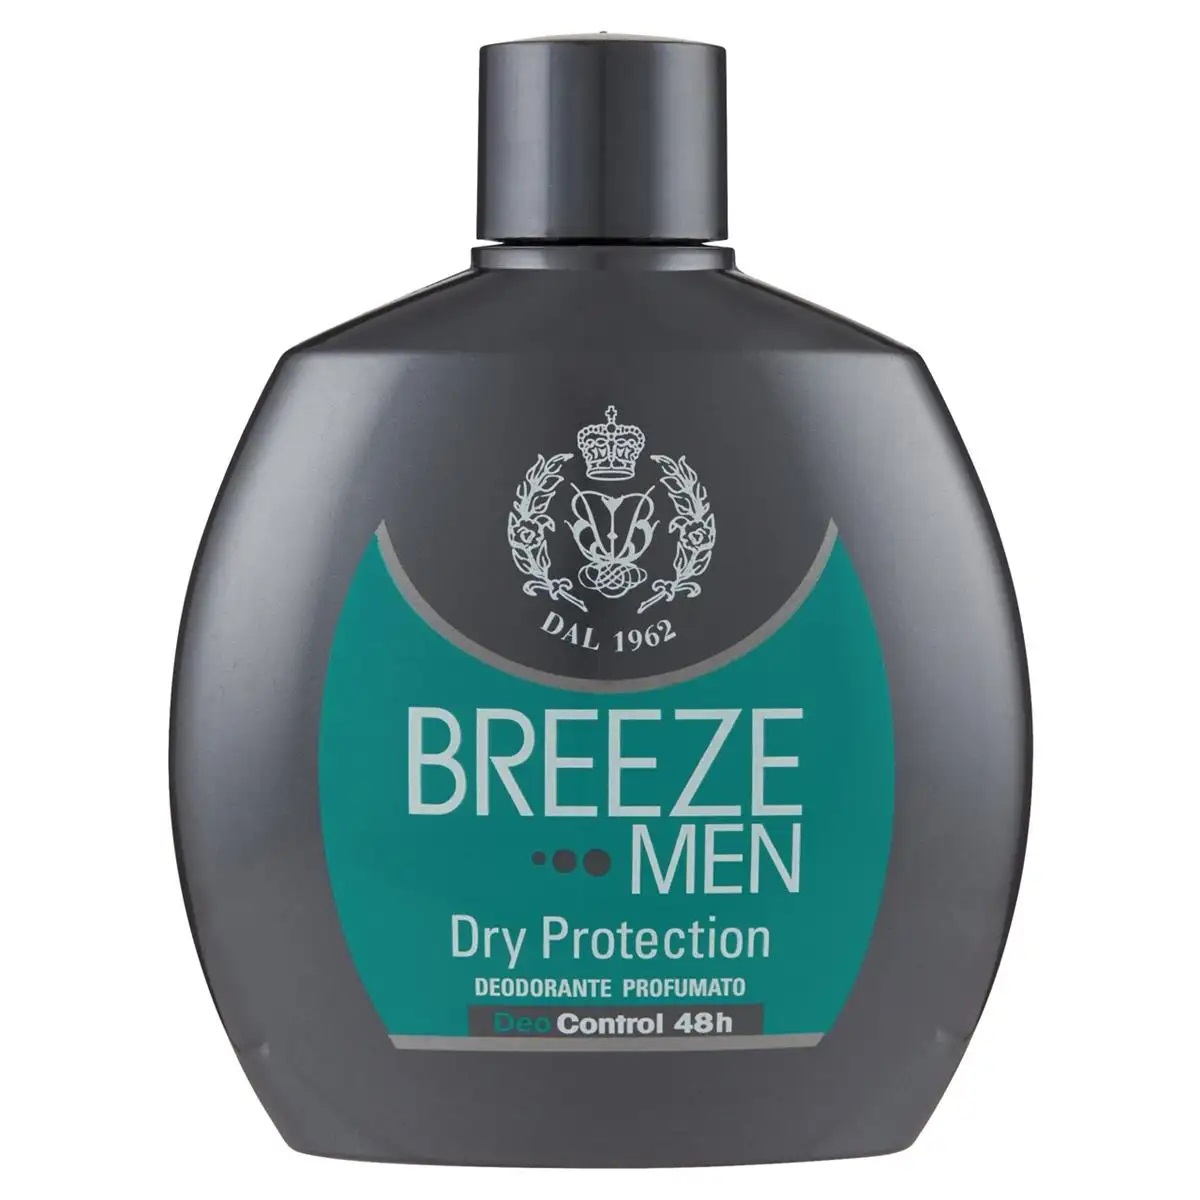 Breeze Men Deodorante squeeze Dry Protection